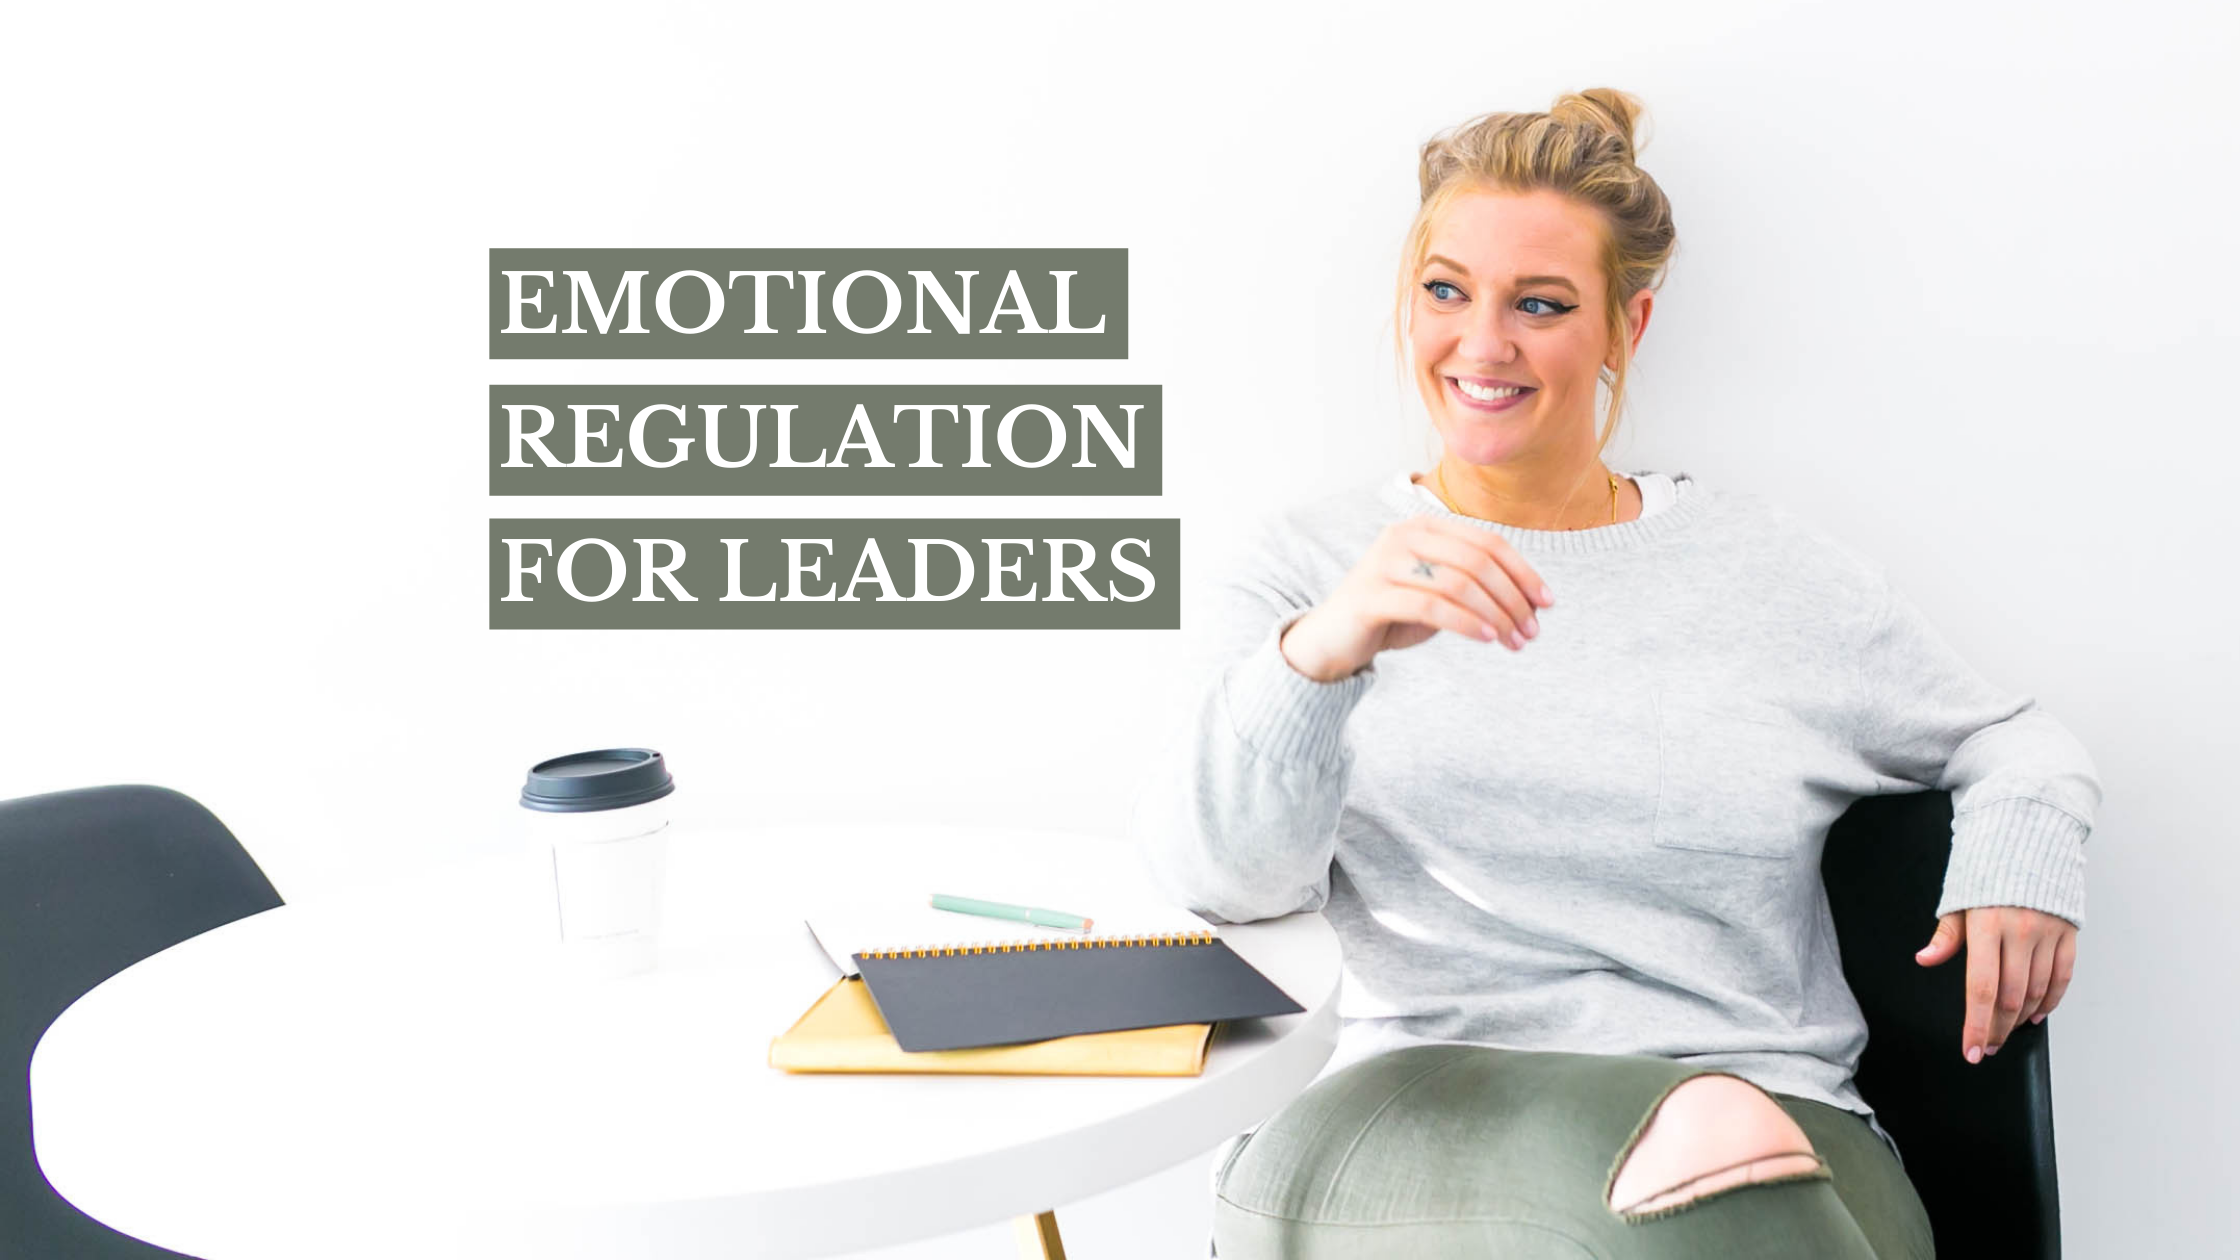 Laura-weldy-emotional-regulation-for-leaders.png